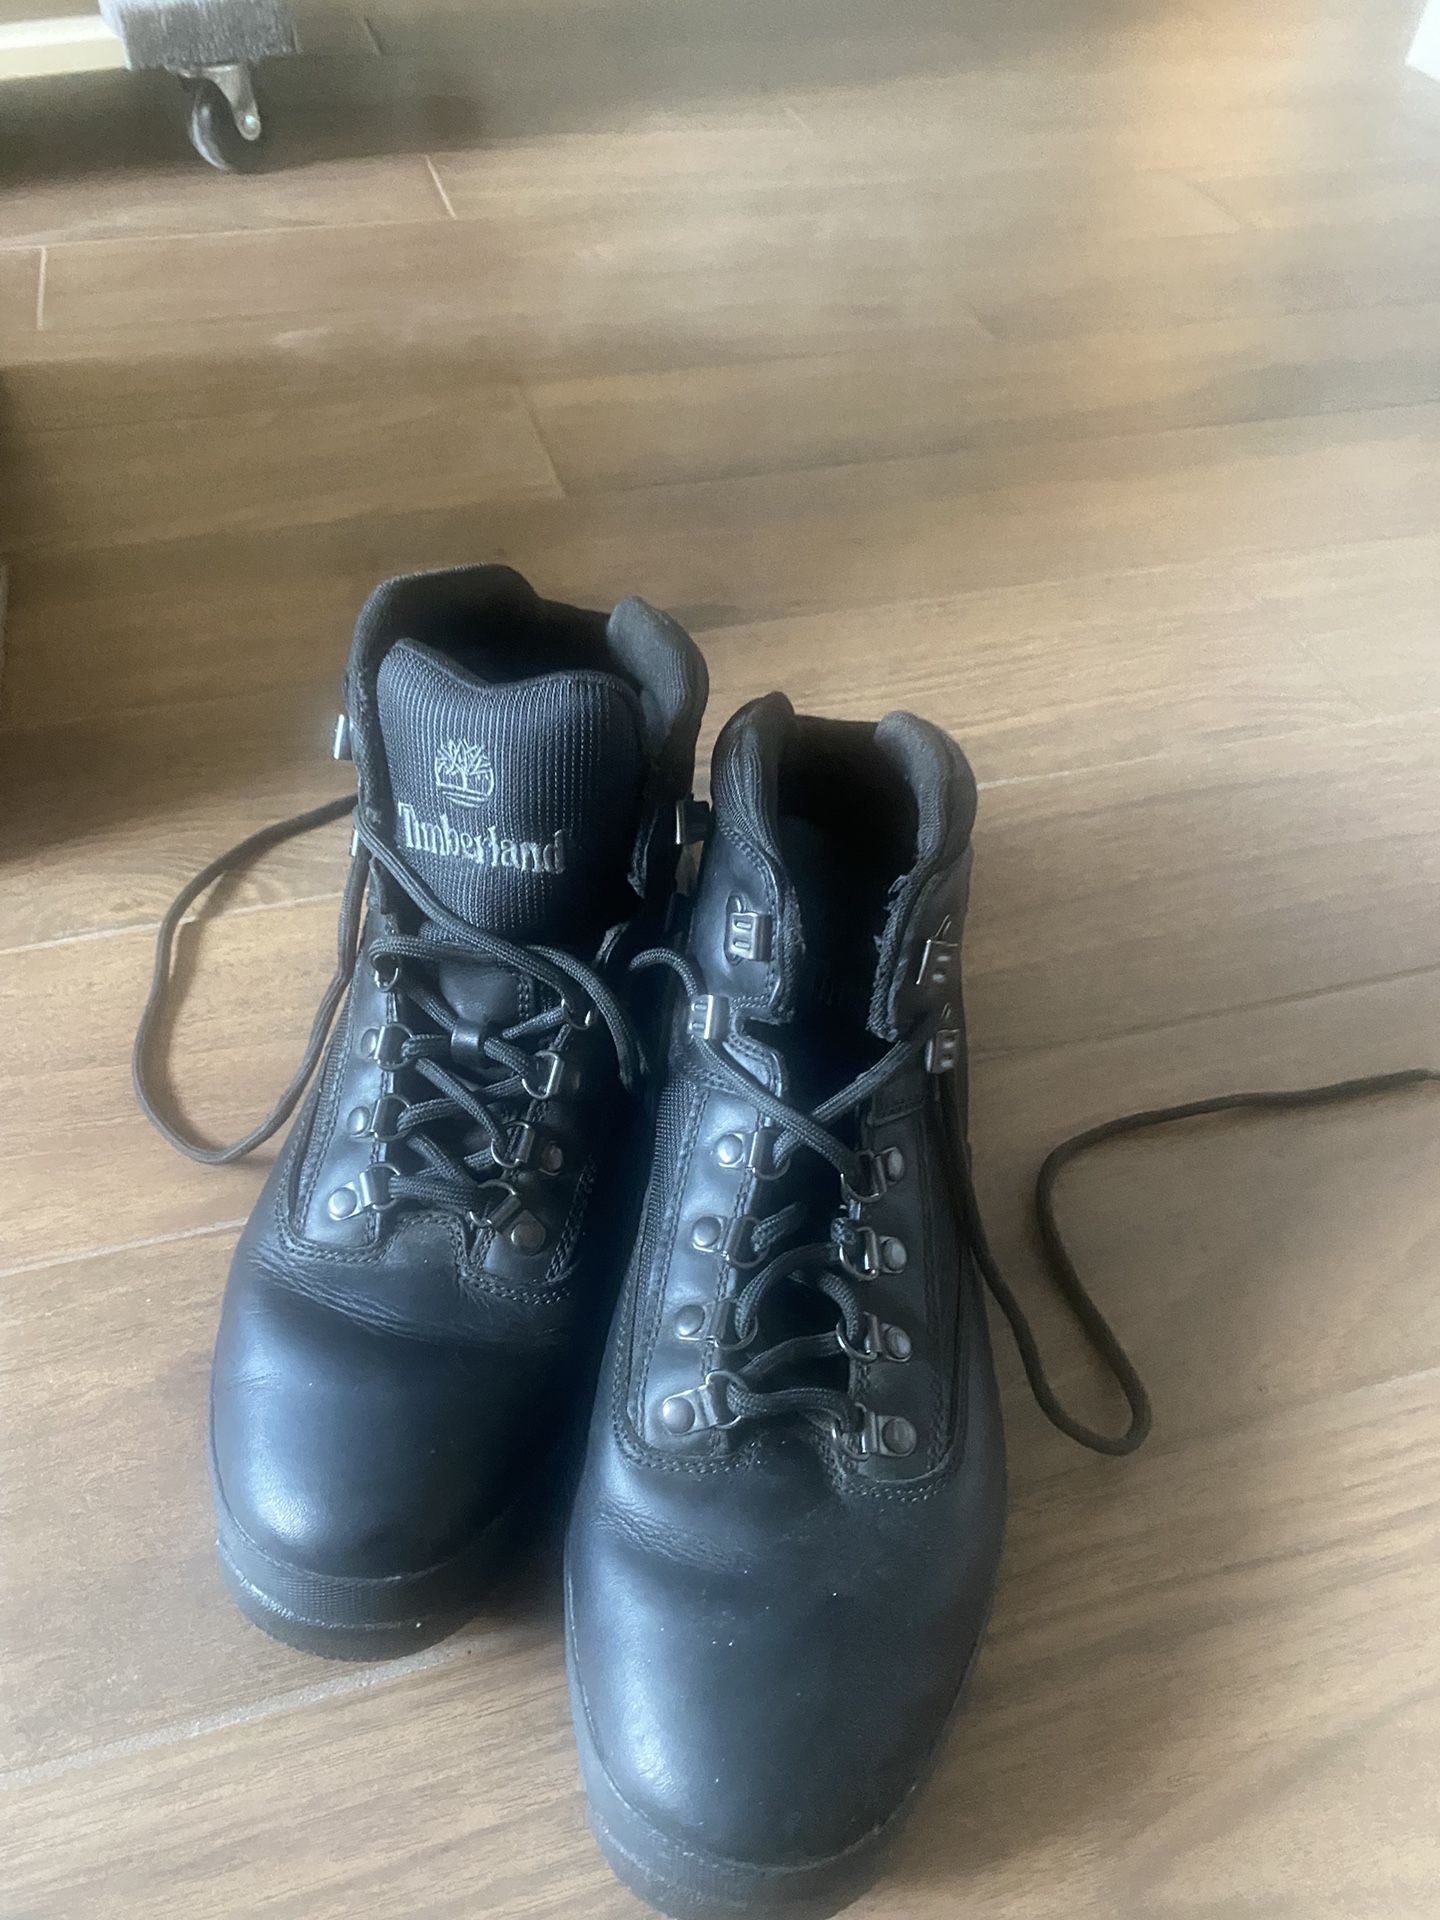 Black Timberland Boots Like New